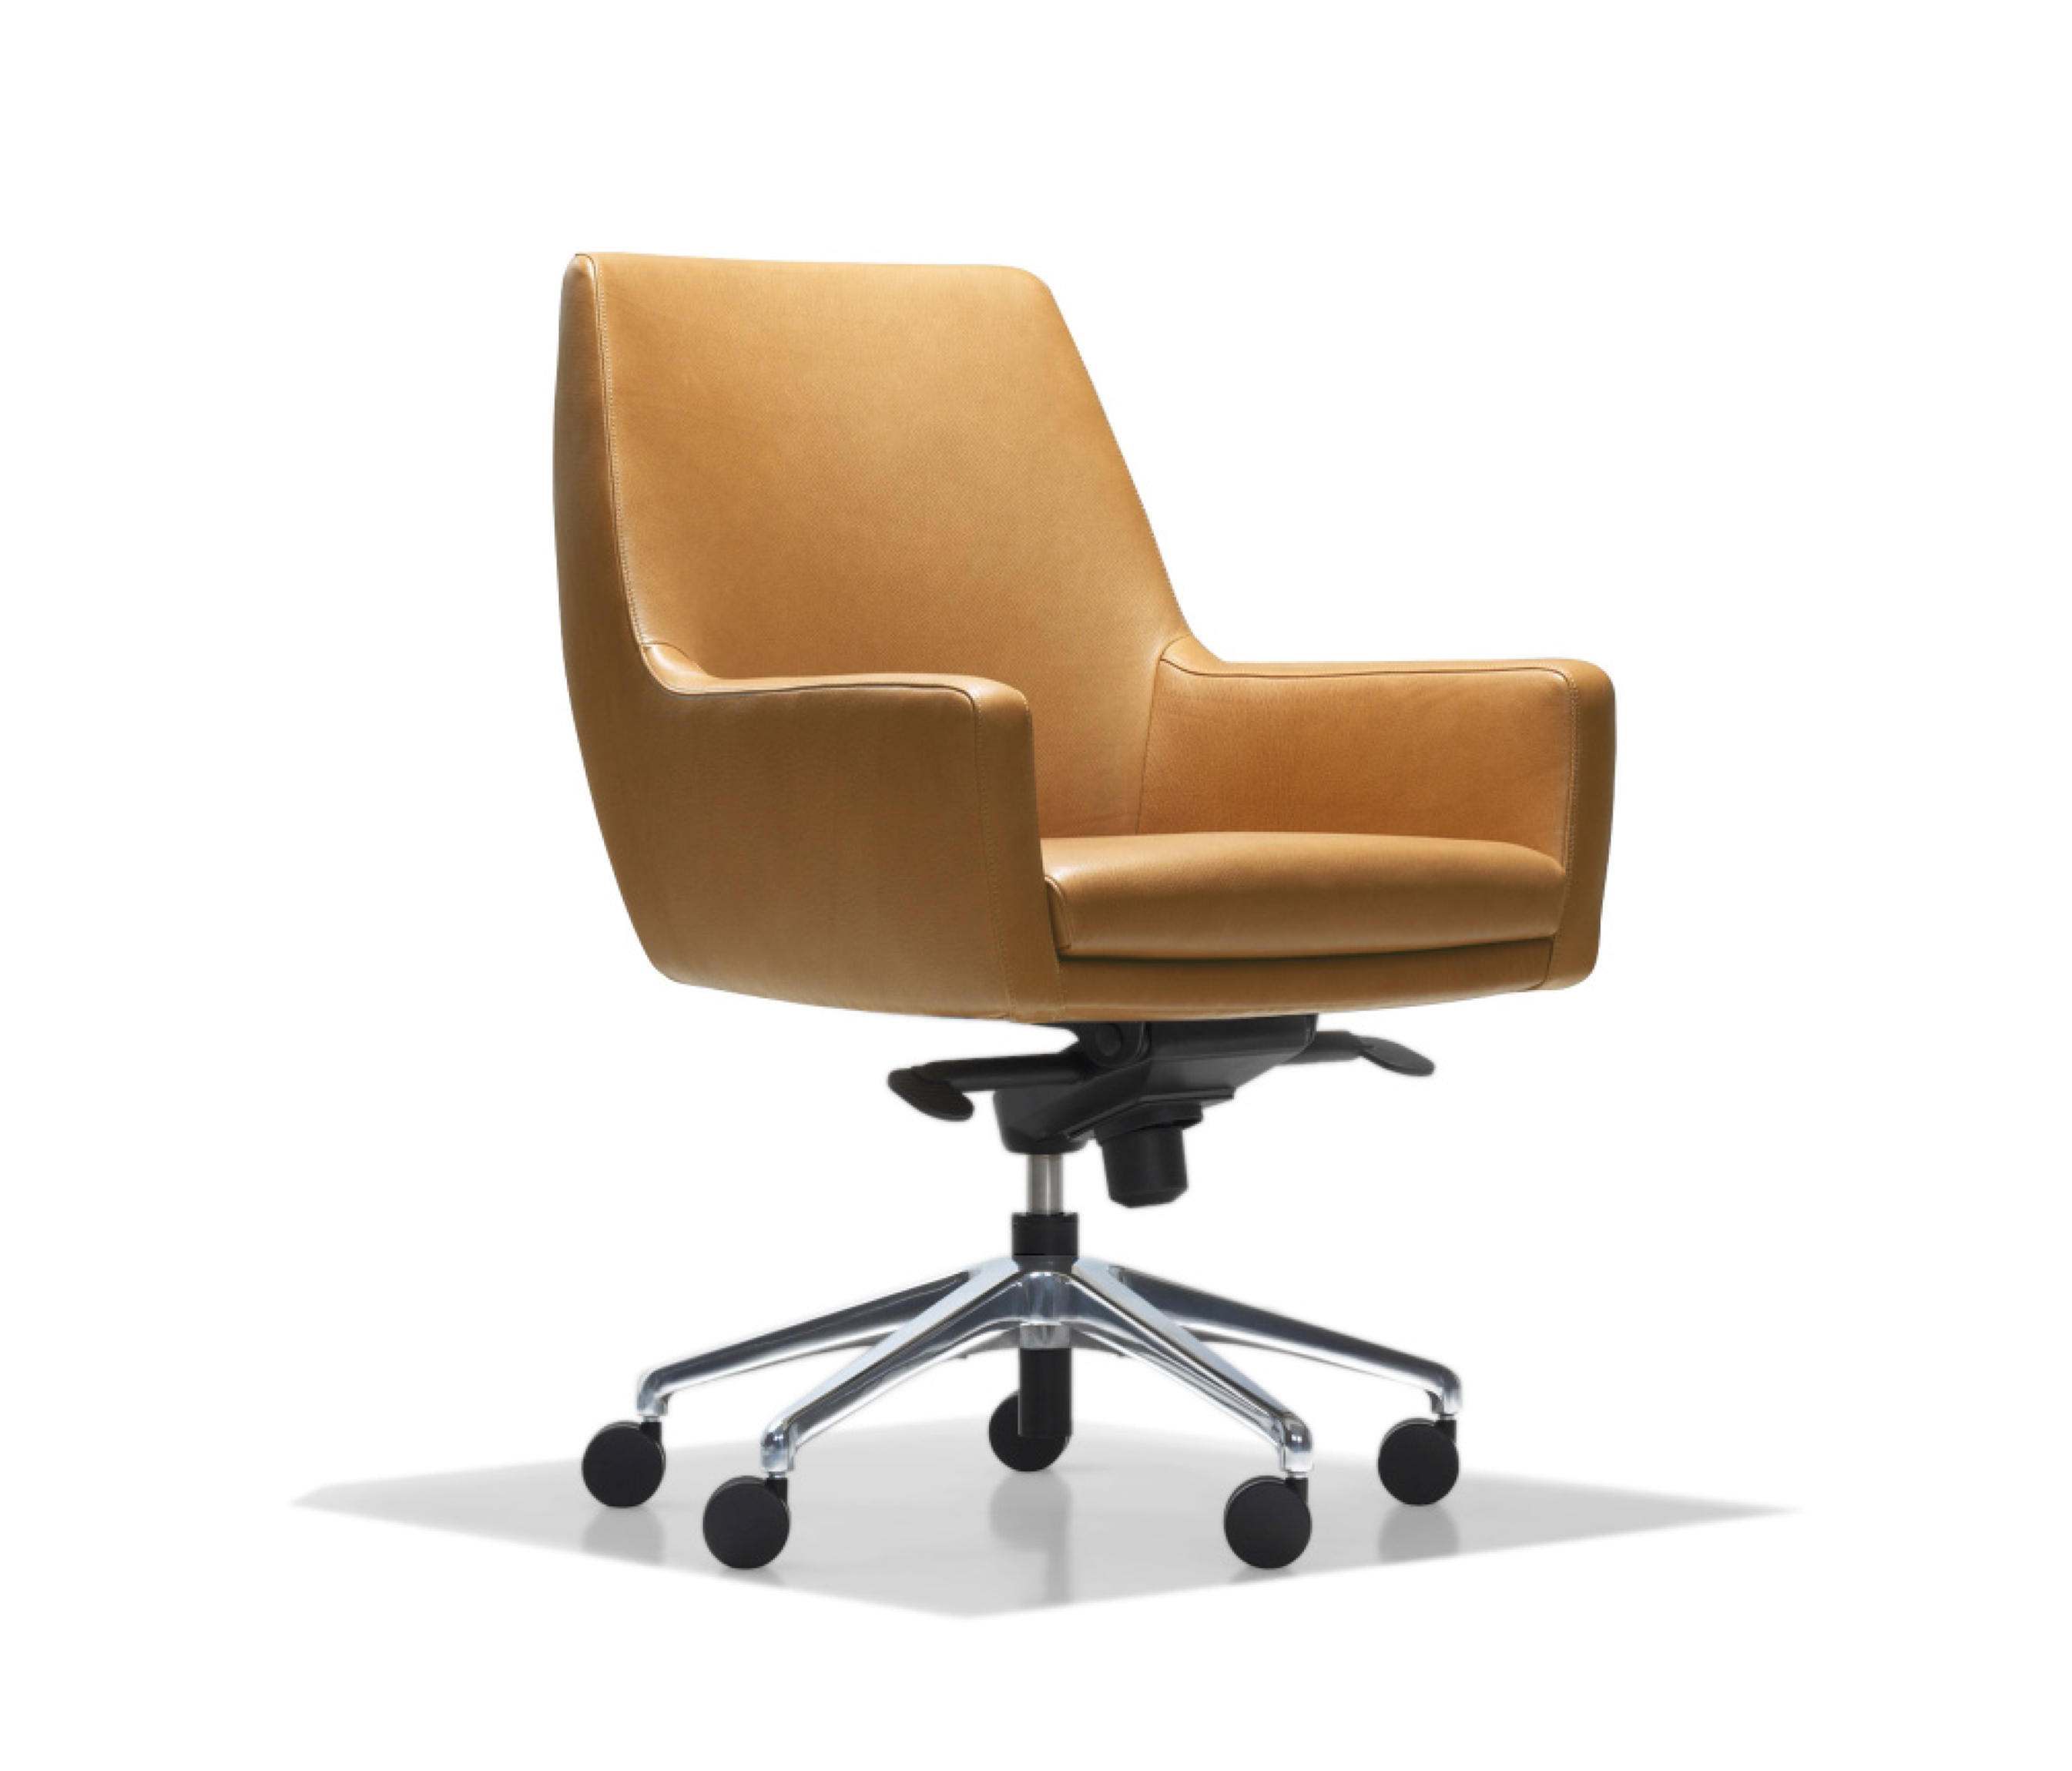 Cardan Chairs From Bernhardt Design Architonic